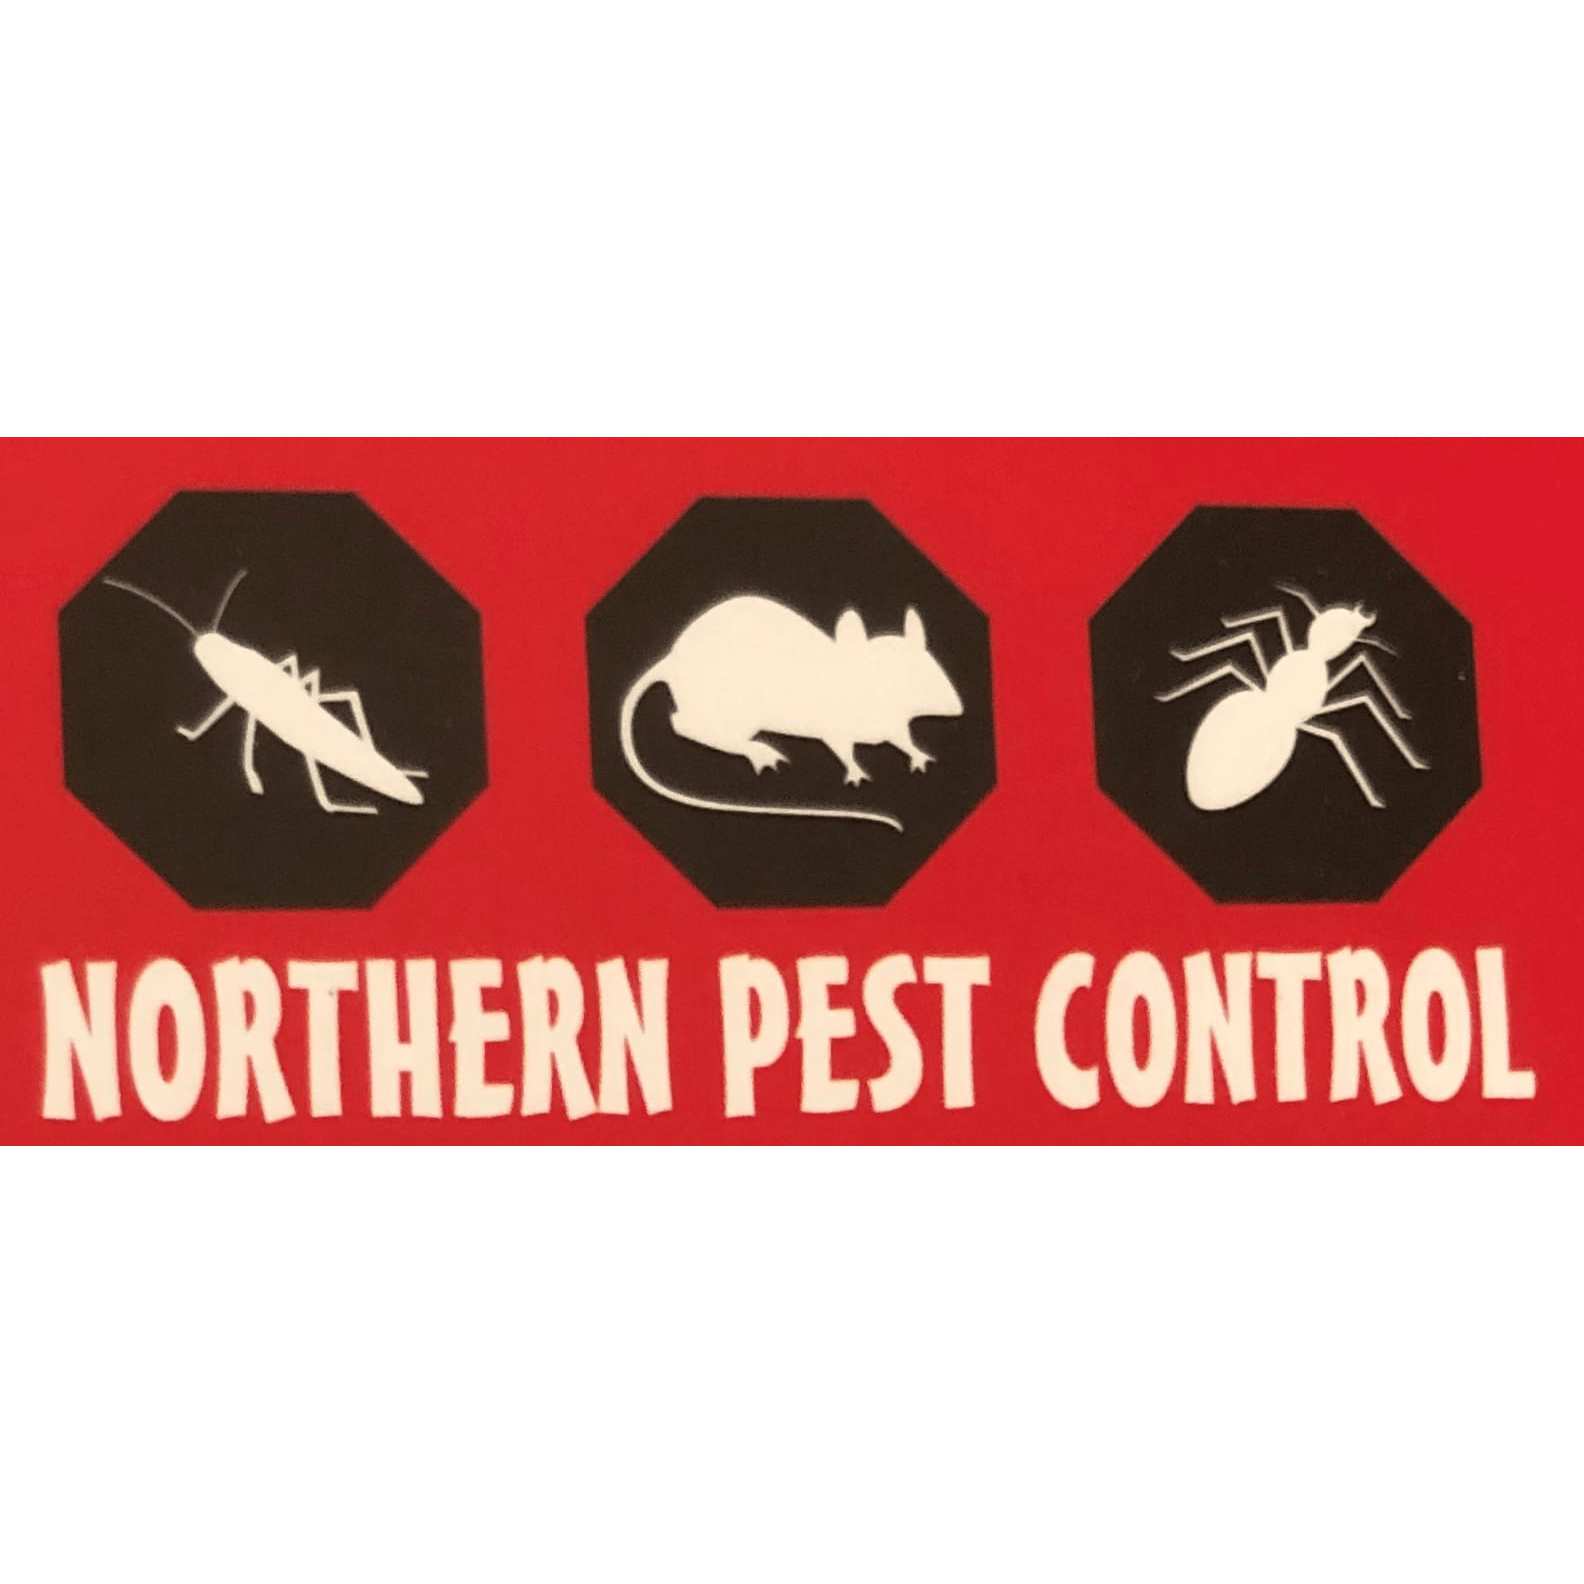 Northern Pest Control - Blackburn, Lancashire BB2 5LJ - 07941 370922 | ShowMeLocal.com